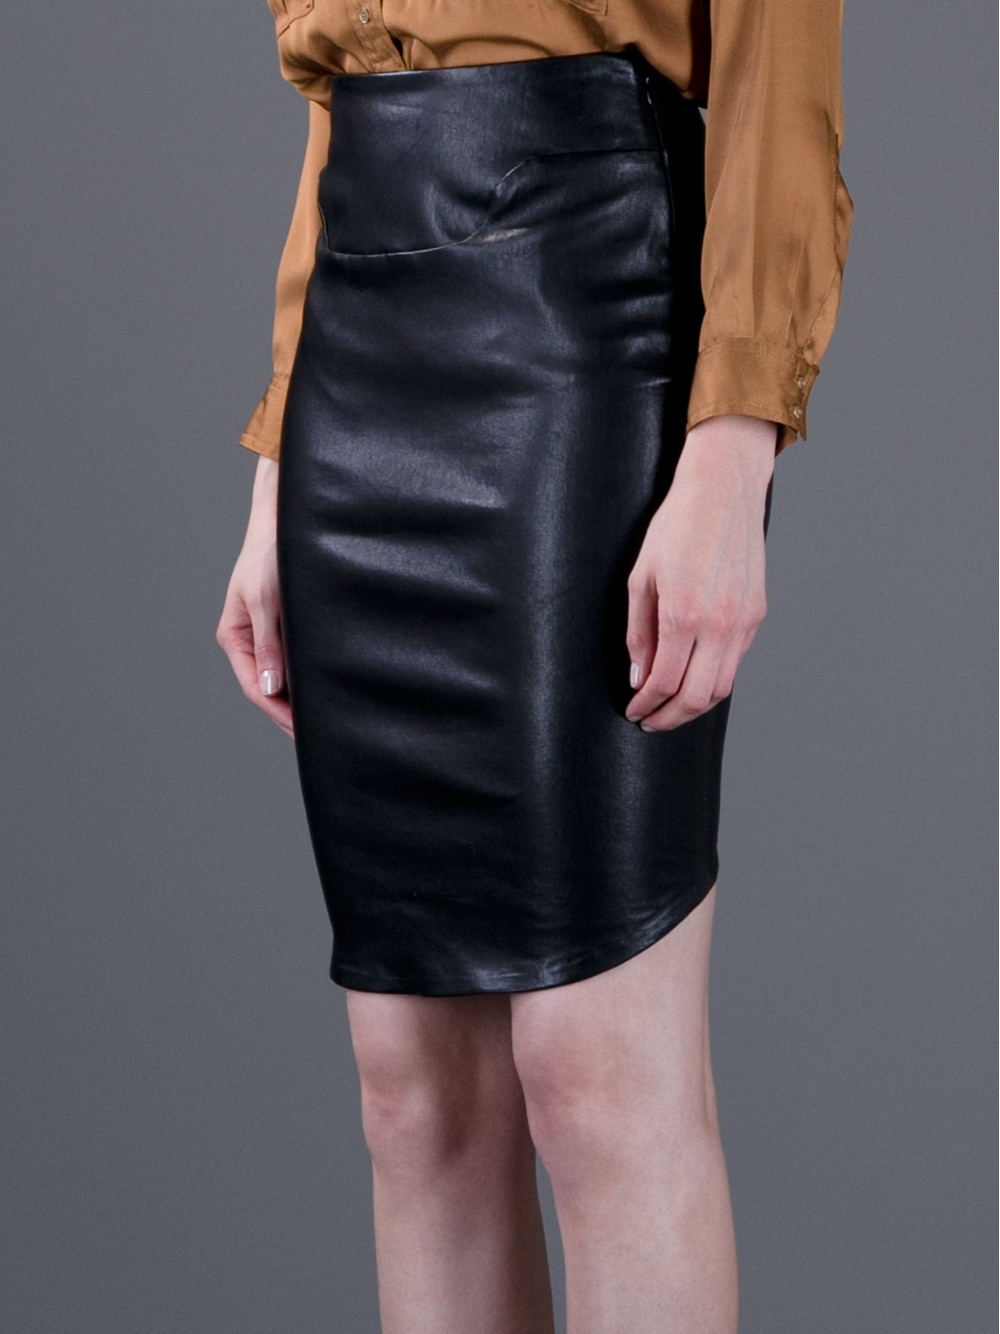 Inspired Style,Fashion & Beauty: Sandra Bullock Pencil Skirt